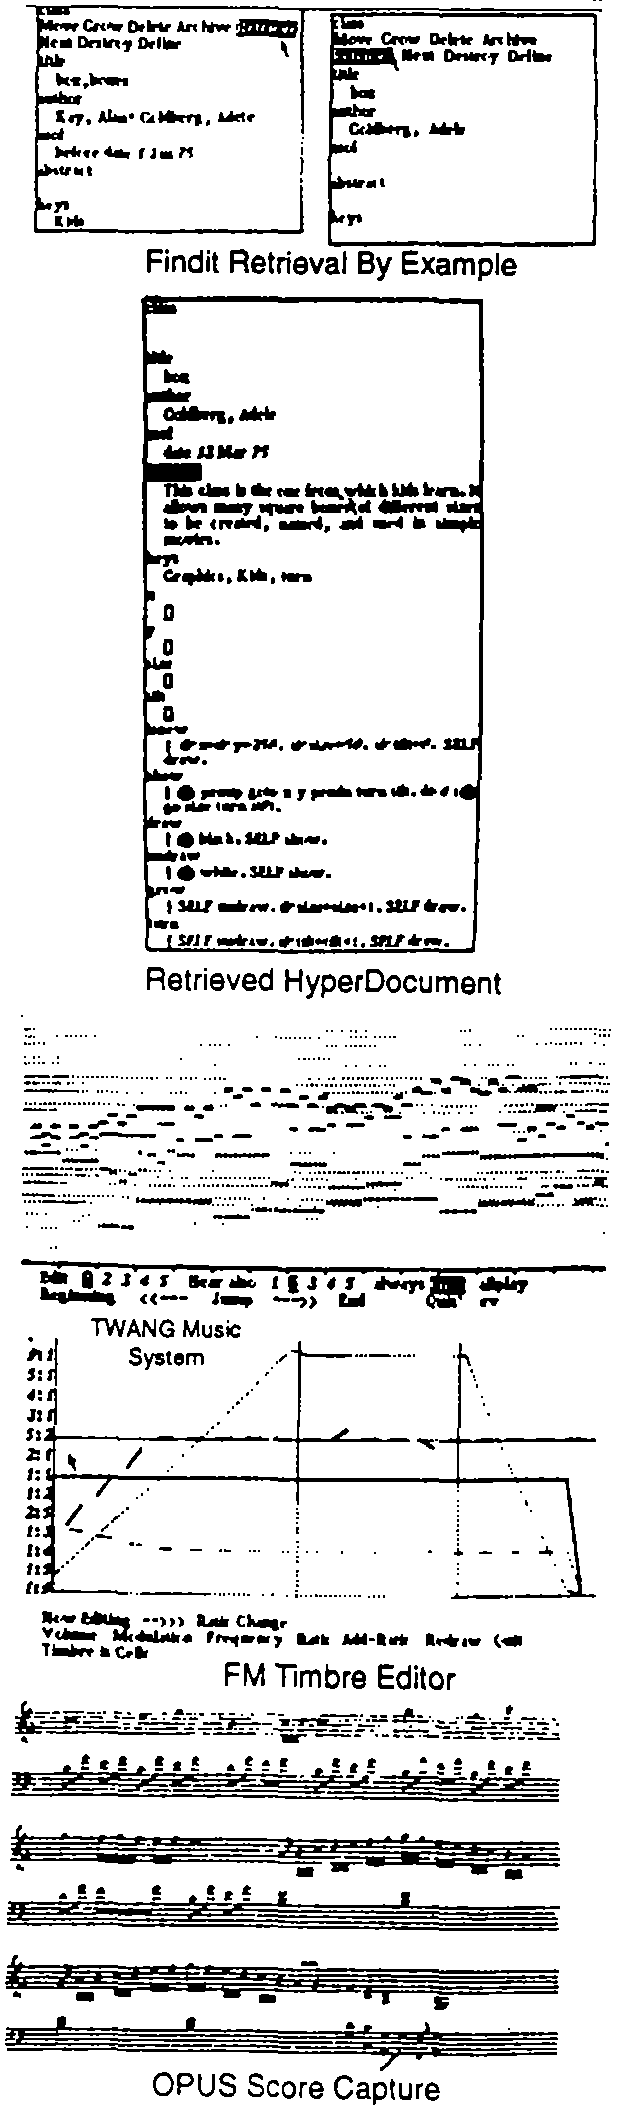 Findit Retrieval By Example, Retrieved HyperDocument, FM Timbre Editor, OPUS Score Capture